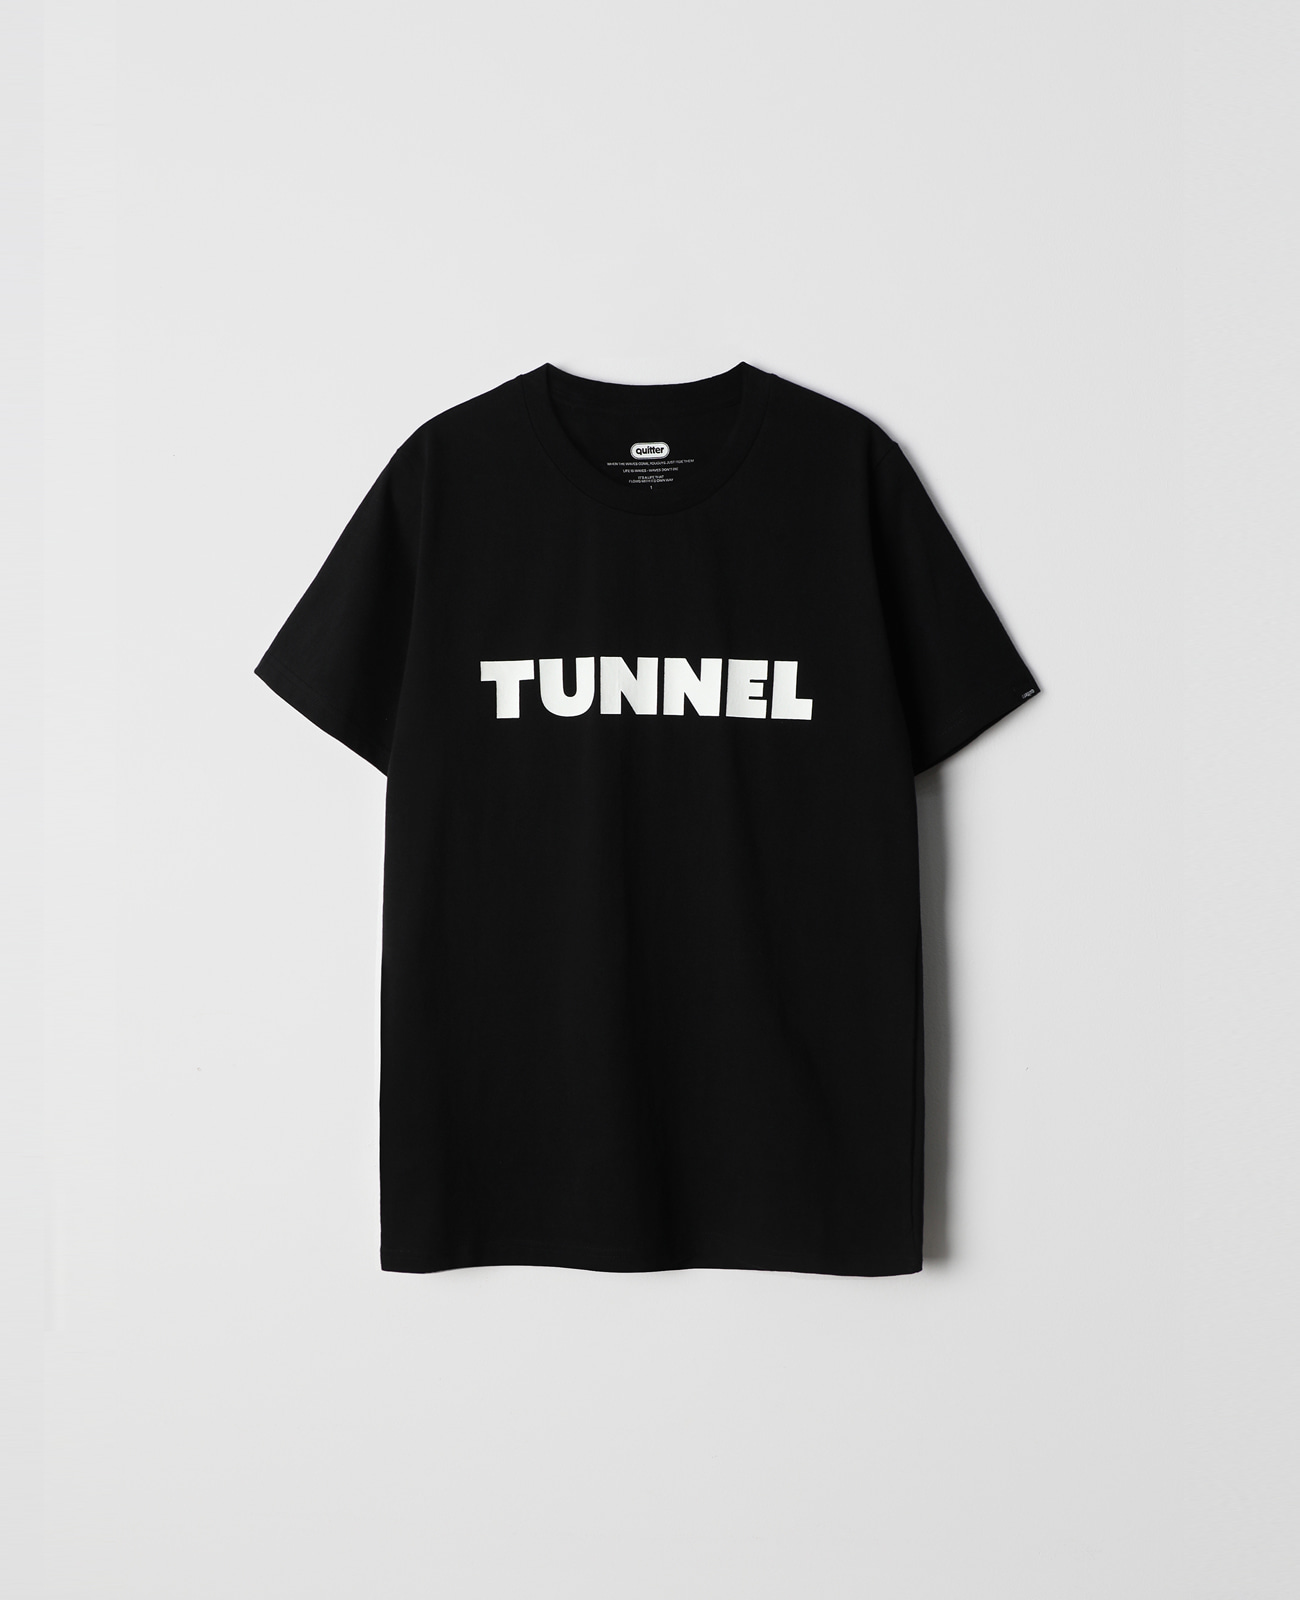 tunnel t-shirt (black)